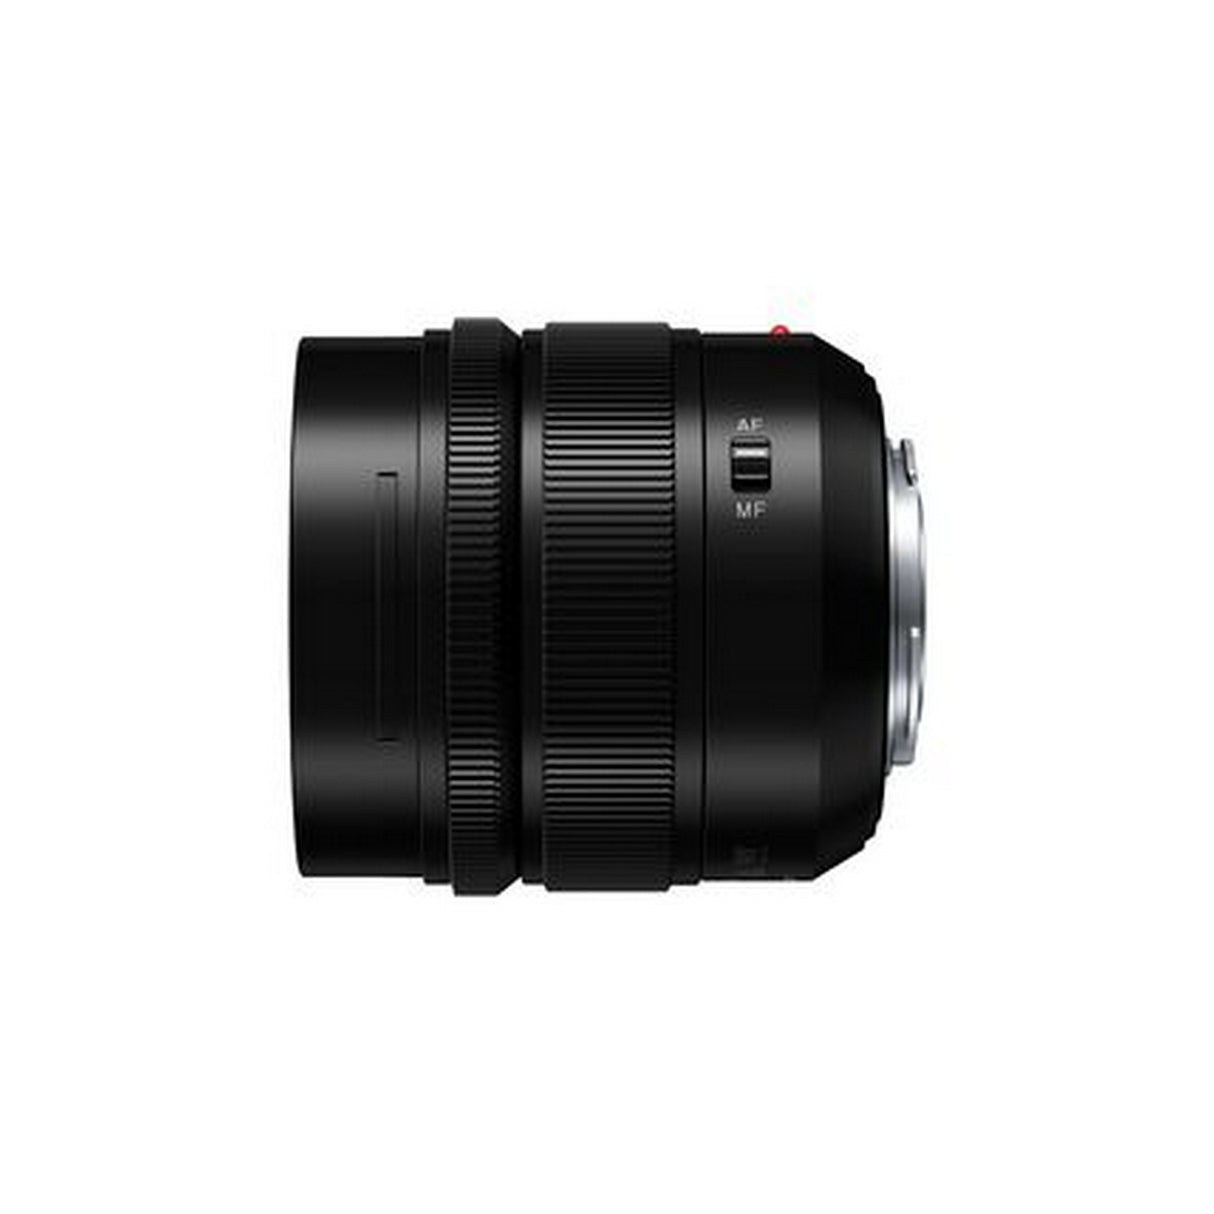 Panasonic LUMIX H-X012 Leica DG Summilux 12mm f/1.4 ASPH. Lens